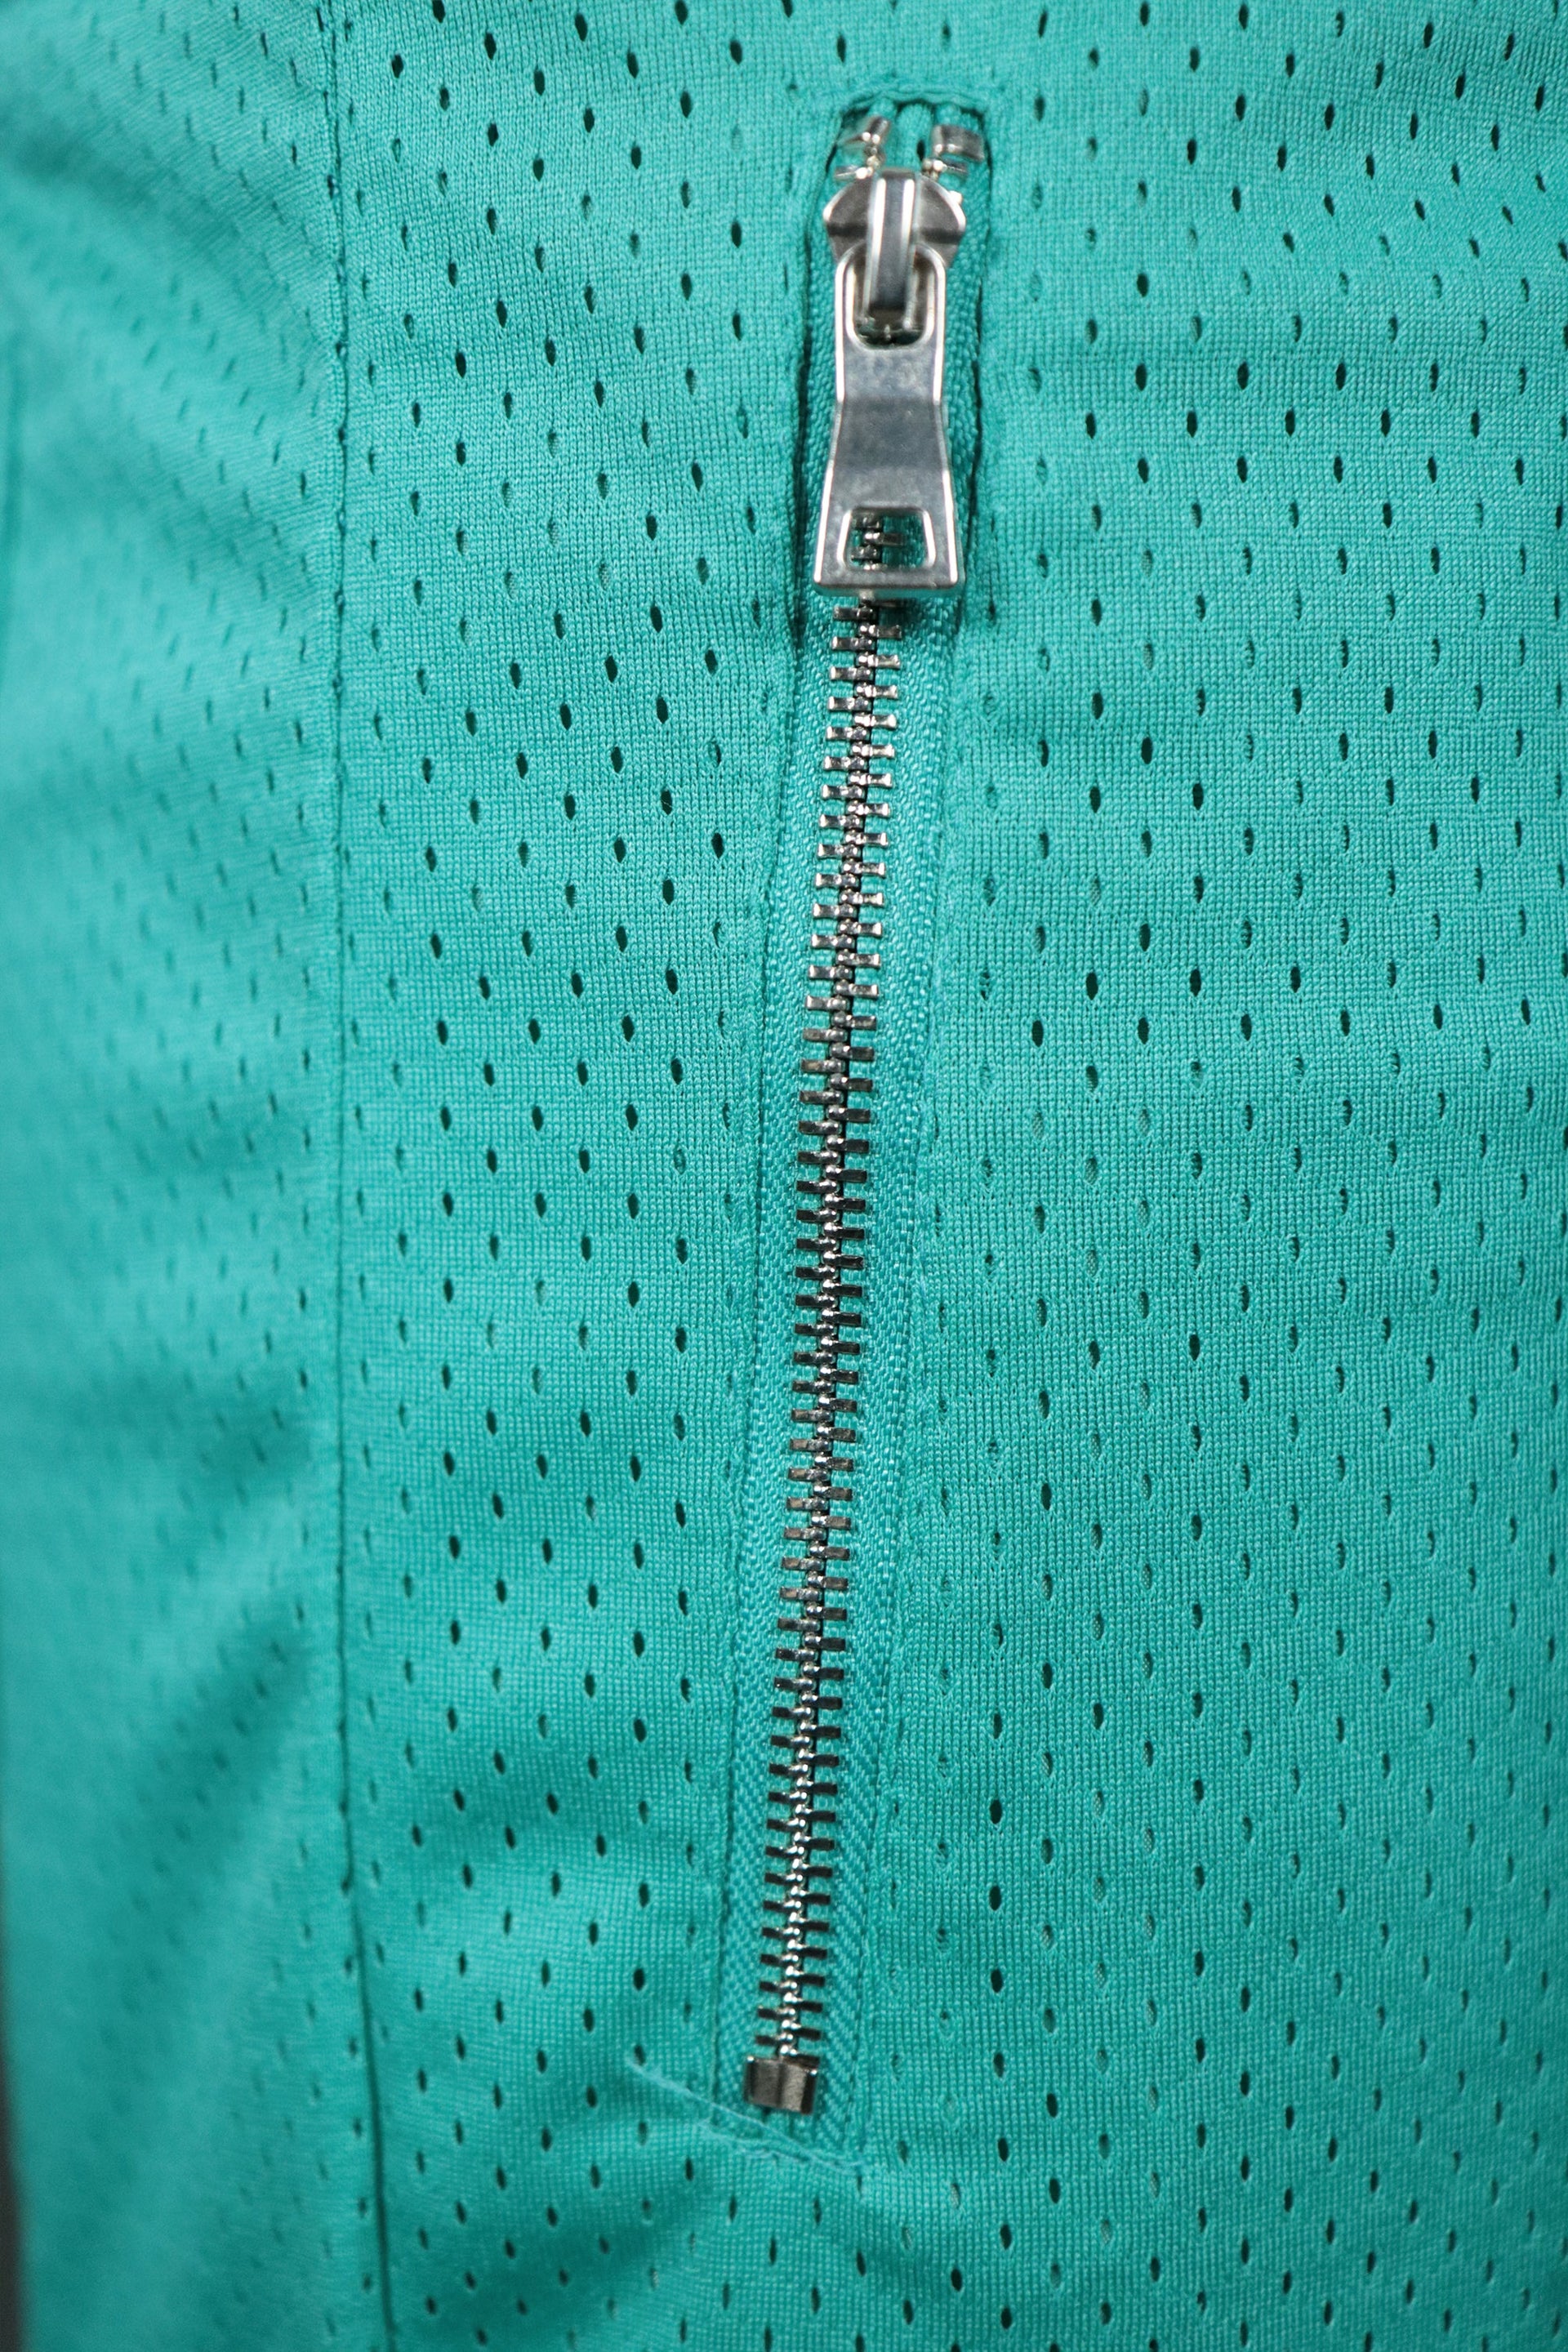 One of the metal zipped pockets of the aqua retro San Antonio basketball shorts with zipper pockets by Jordan Craig.